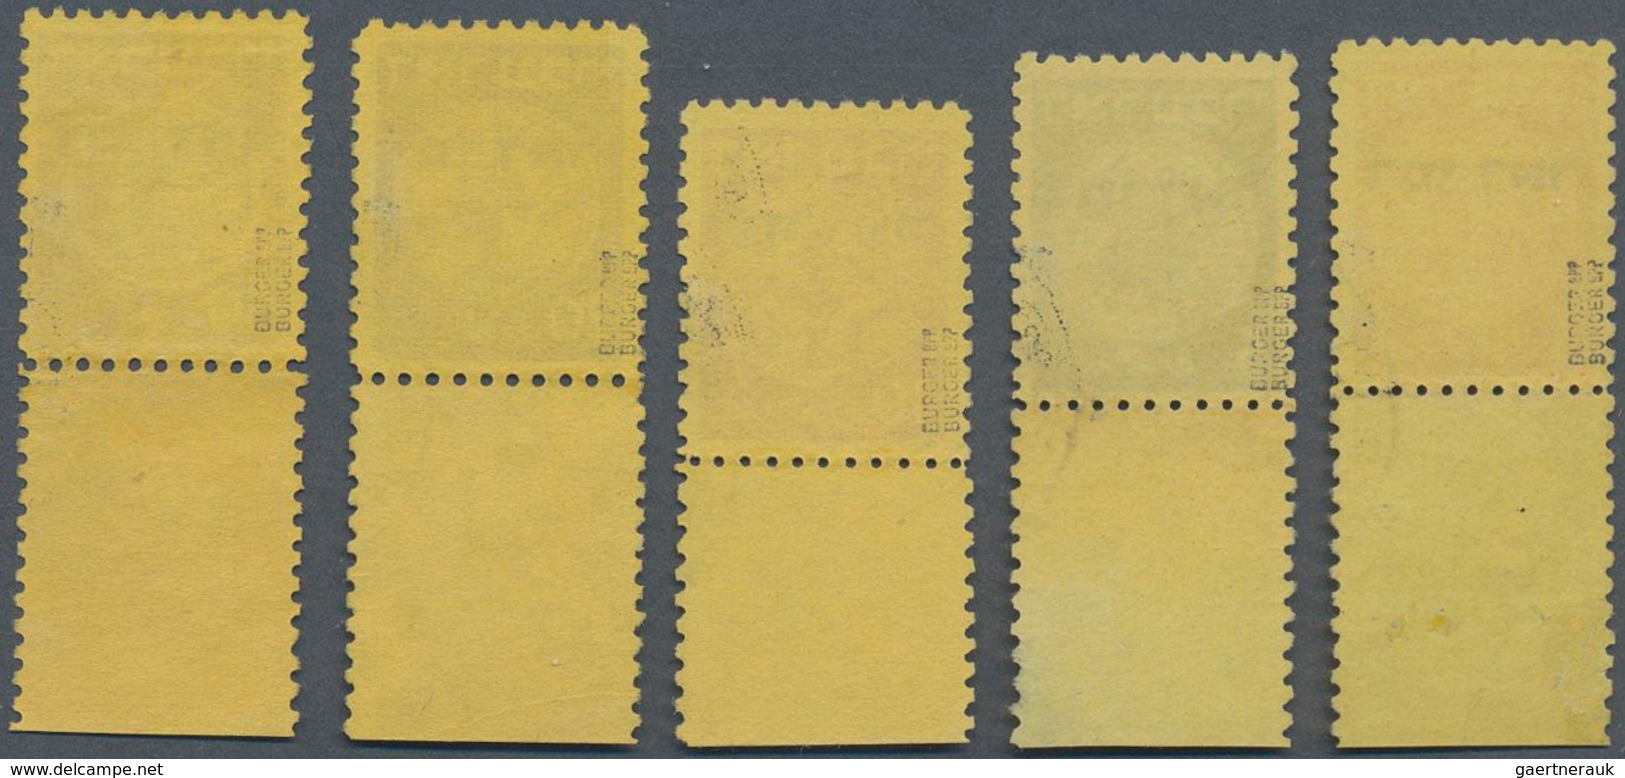 Israel - Portomarken: 1948, Overprints On "Doar Ivri", 3 M. To 50 M., Complete Tabbed Set, Used, Sca - Portomarken